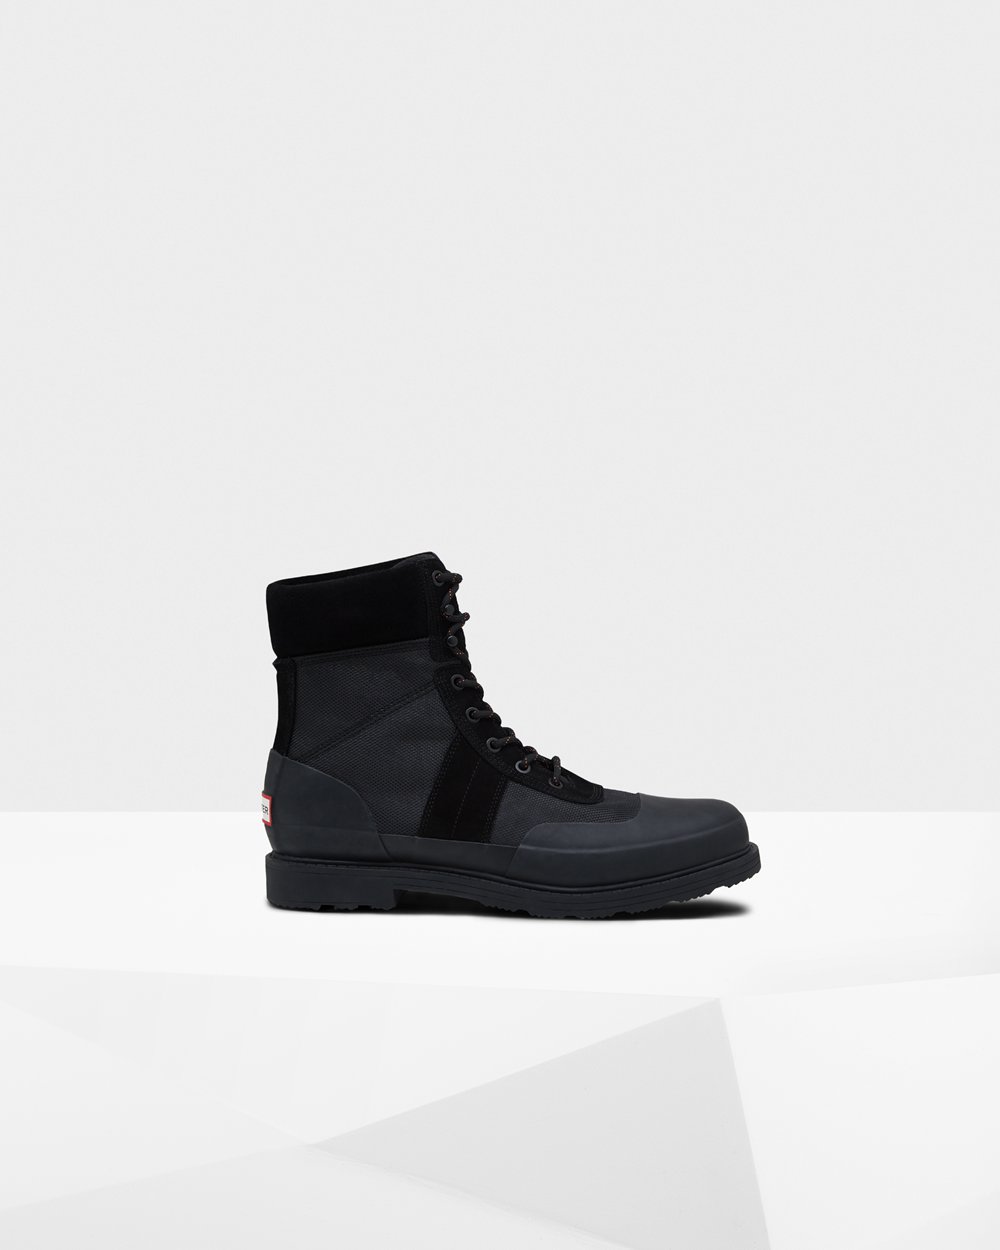 Mens Ankle Boots - Hunter Original Insulateds (75KUOBDIW) - Black